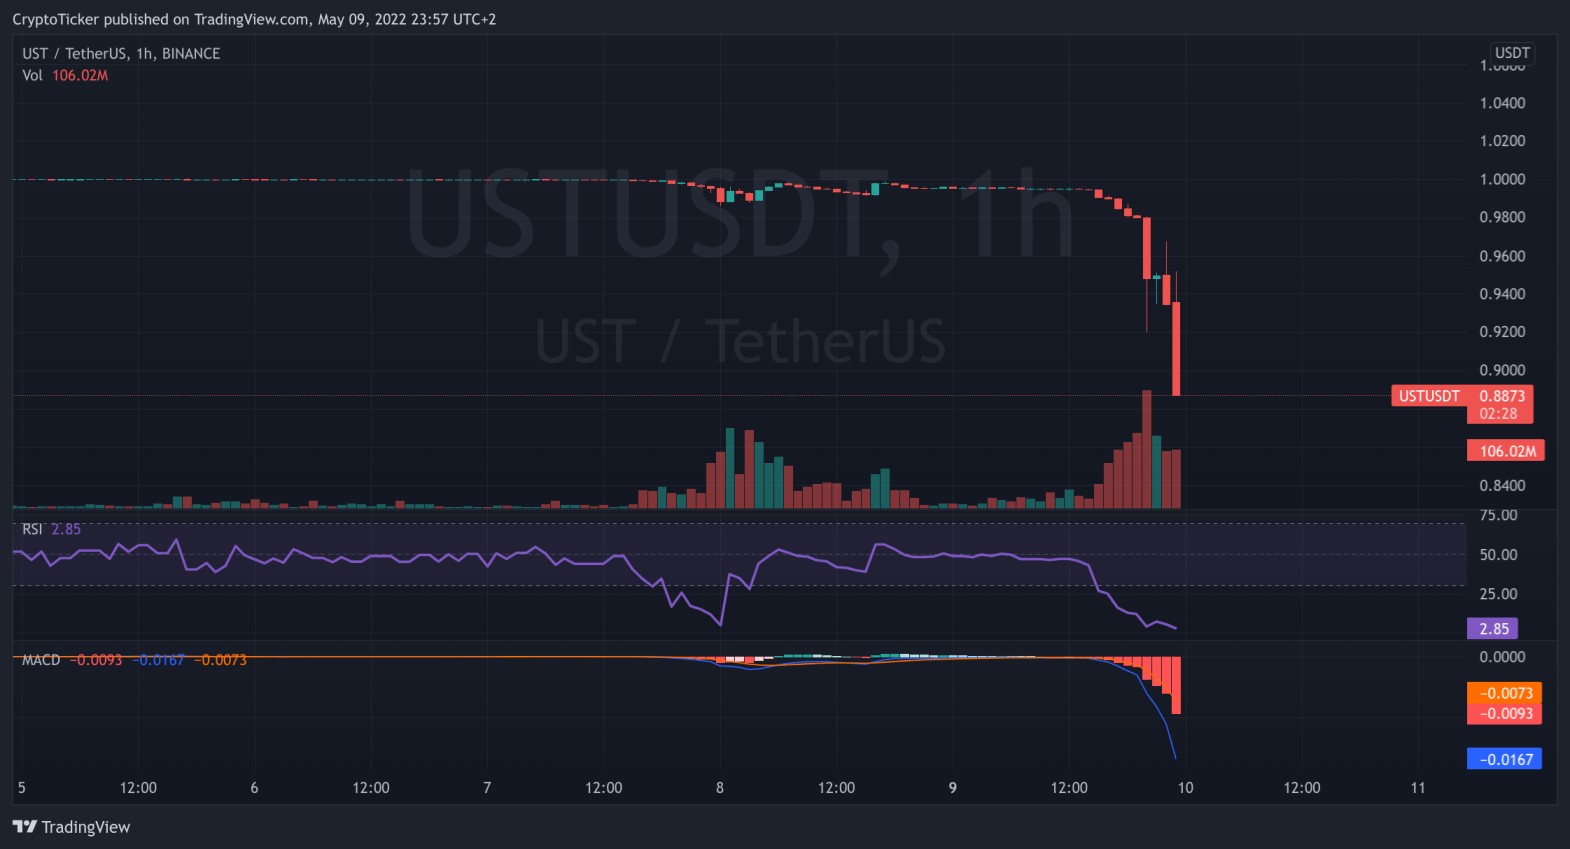  UST/USDT 1-hour chart showing the crash of UST